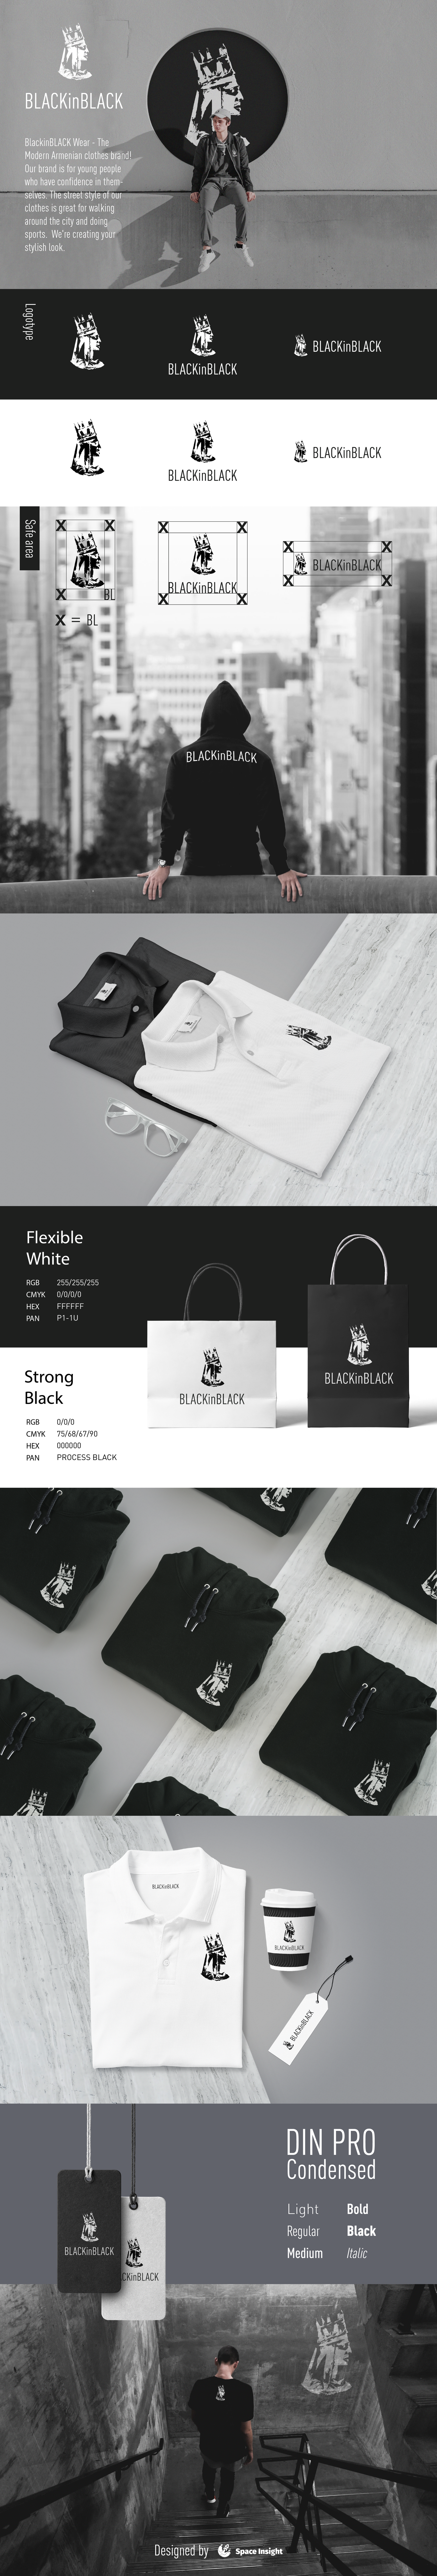 BlackinBlack branding-01